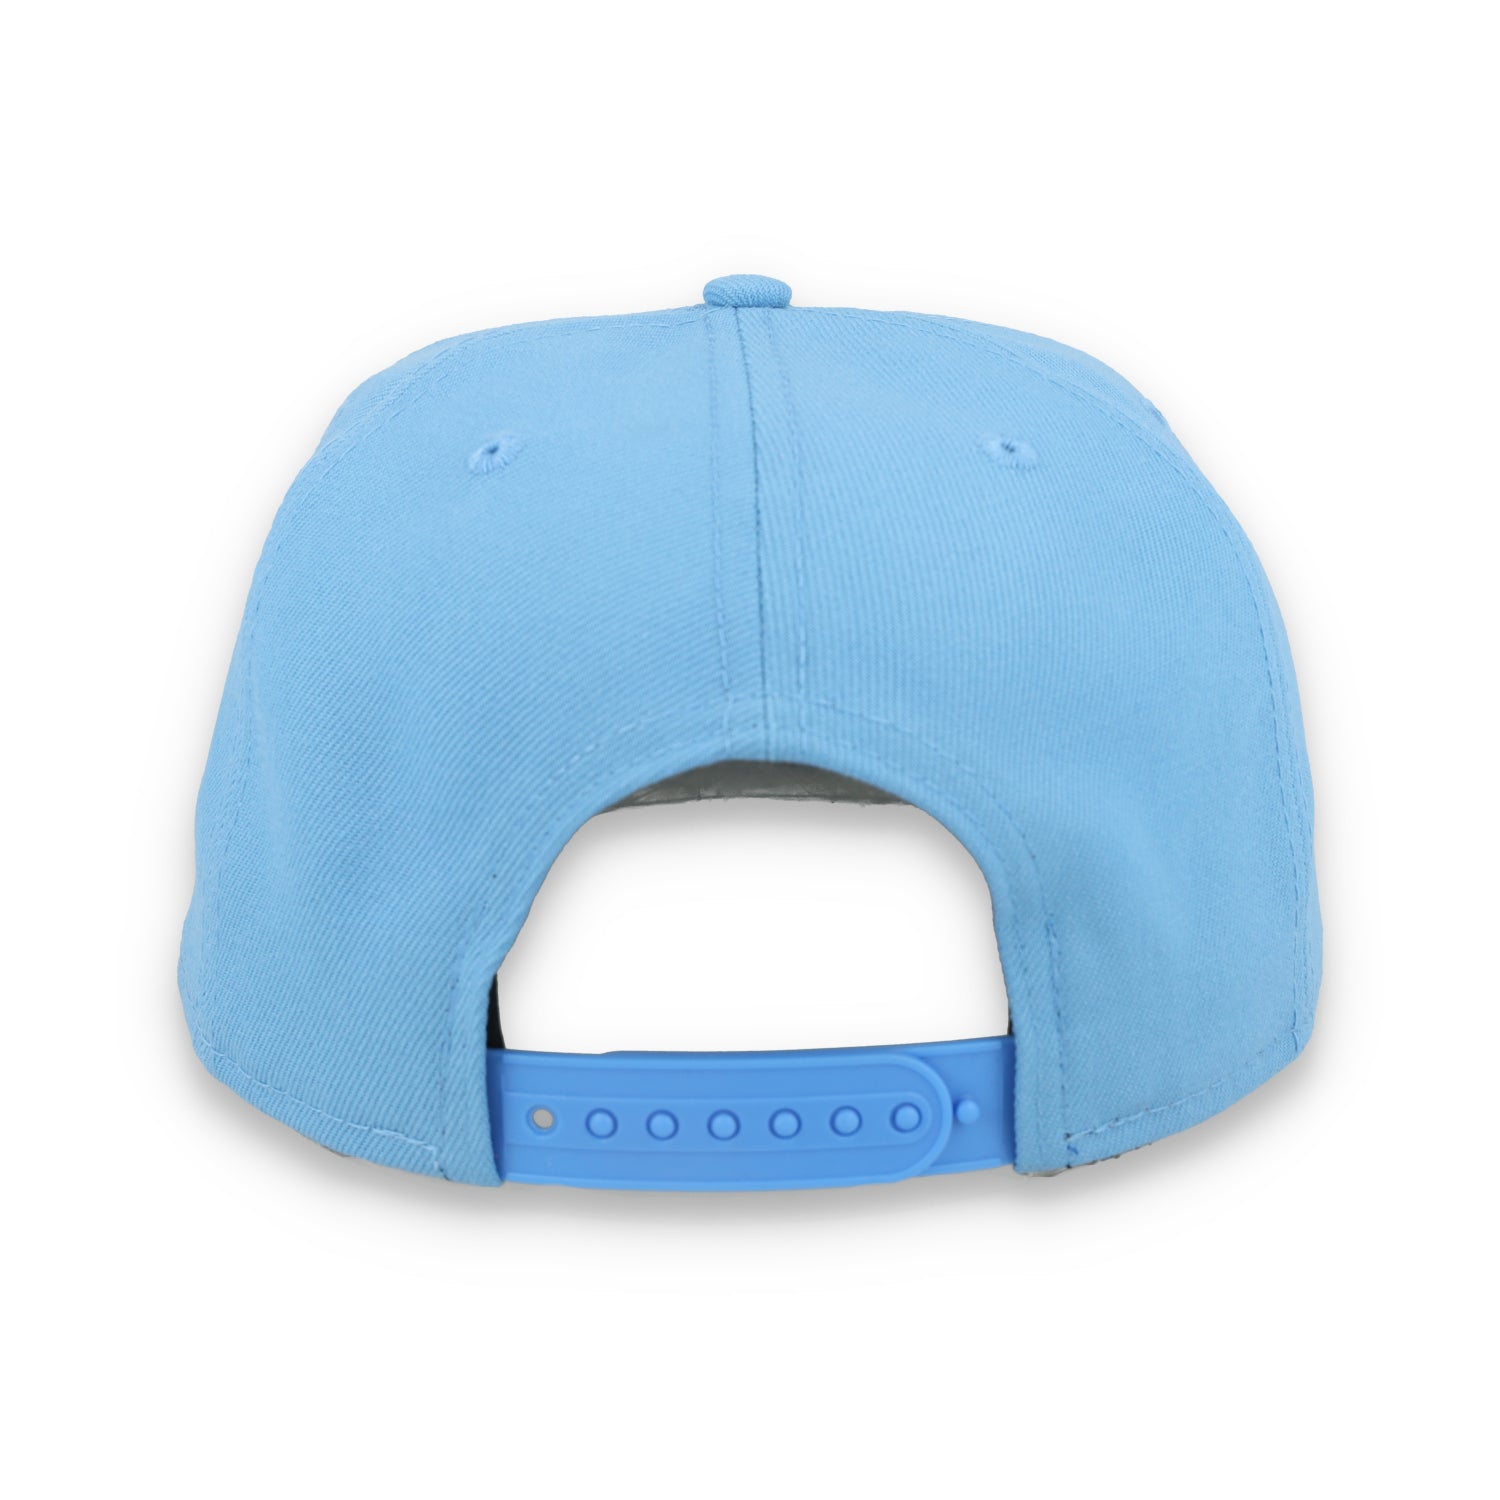 New Era Seattle Mariners 9Fifty Snapback Hat-Sky Blue